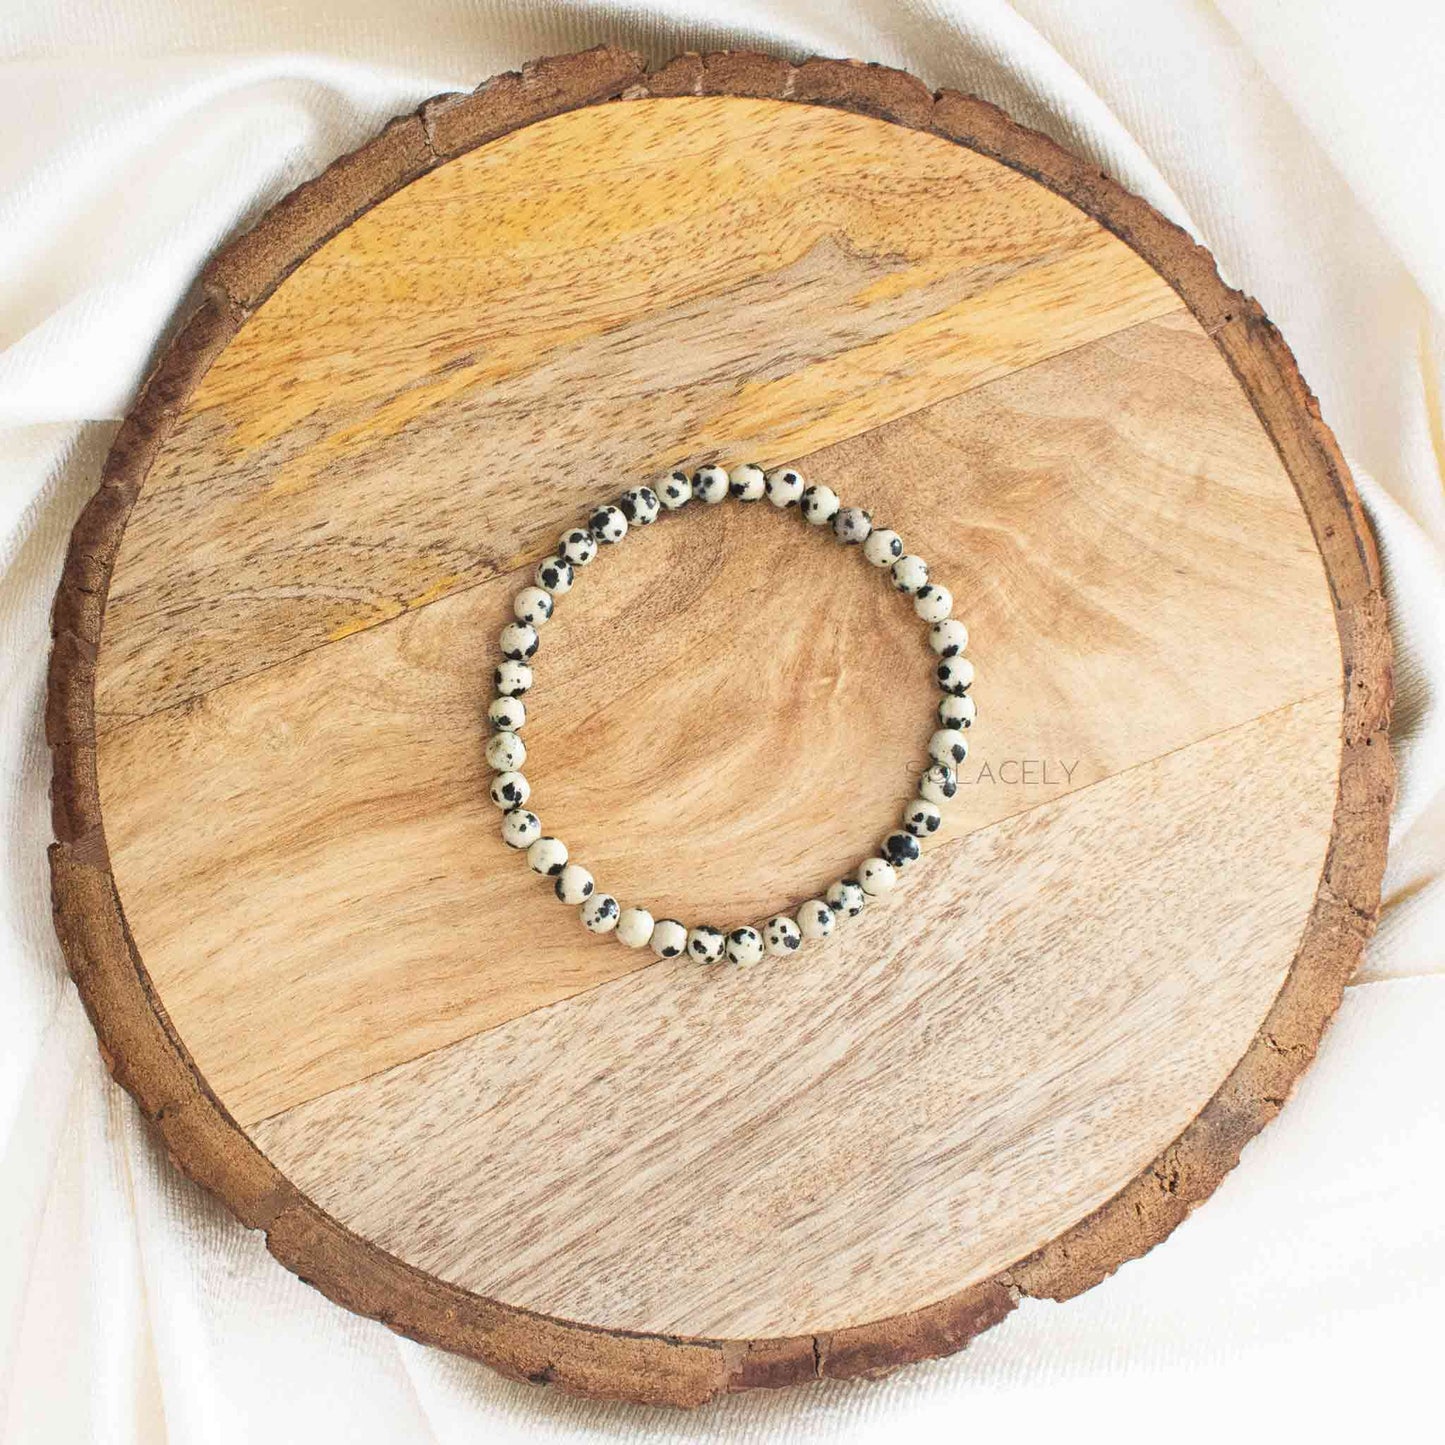 Dalmatian Bracelet- 4mm Beads